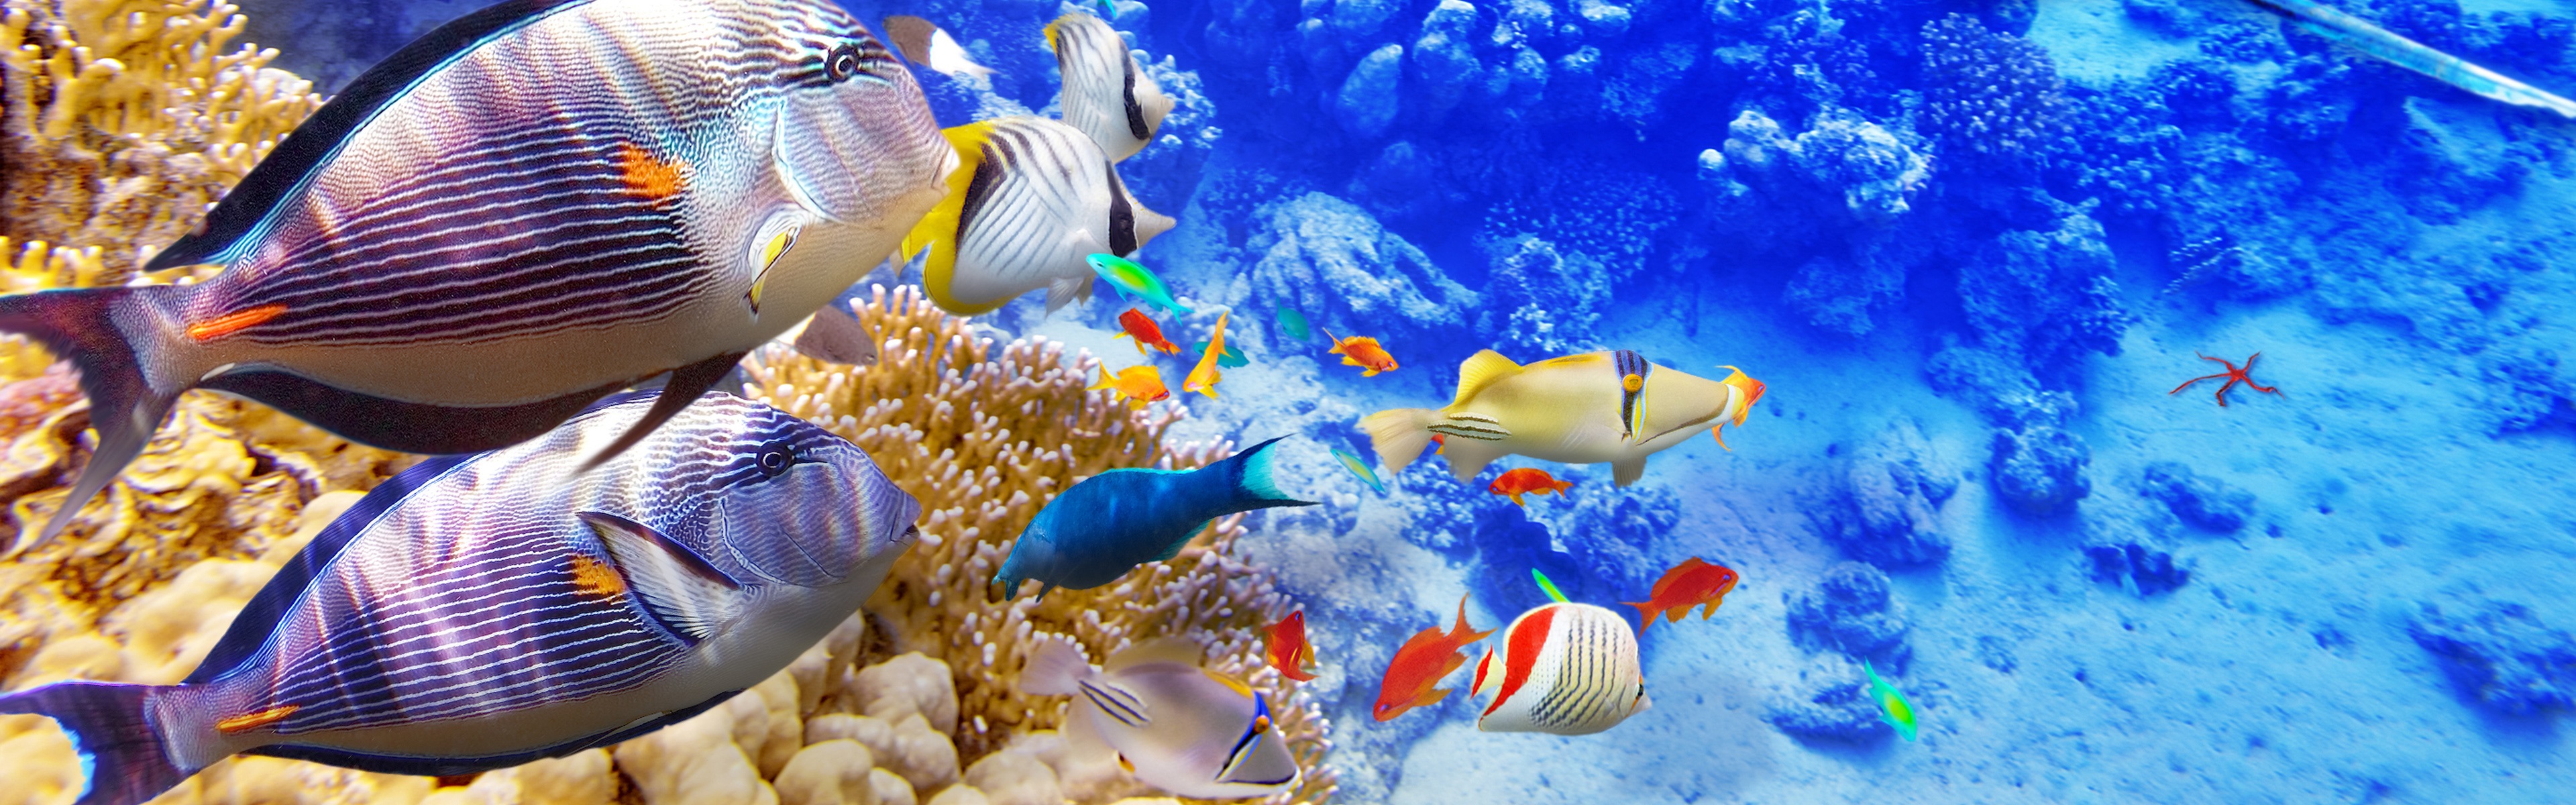 3840x12003840x2160 - Beautiful Sea Fish , HD Wallpaper & Backgrounds